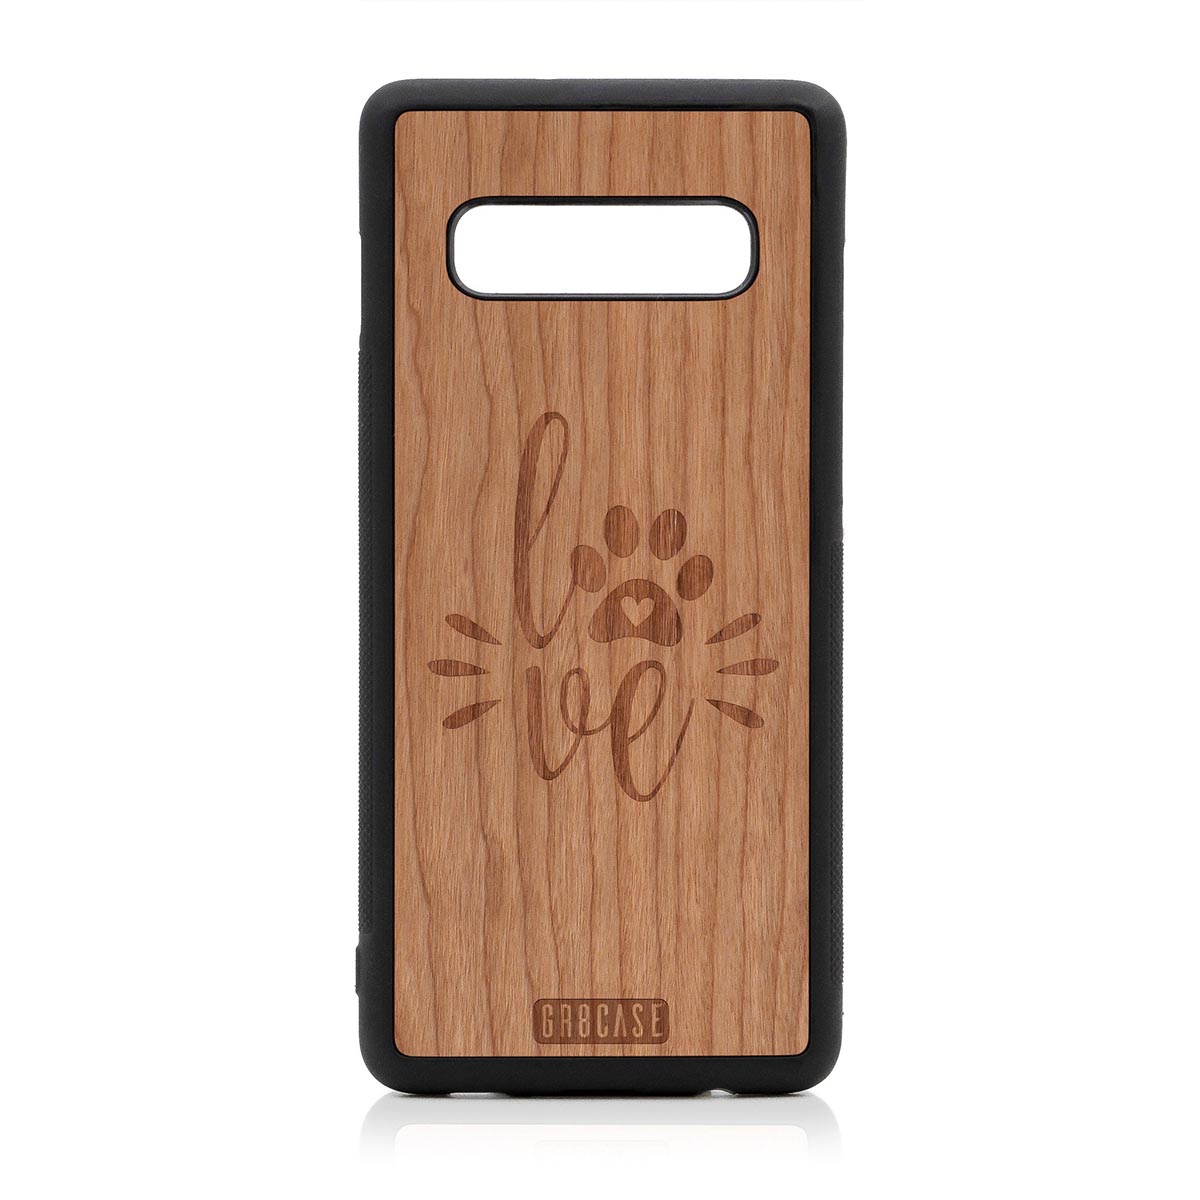 Paw Love Design Wood Case Samsung Galaxy S10 Plus by GR8CASE